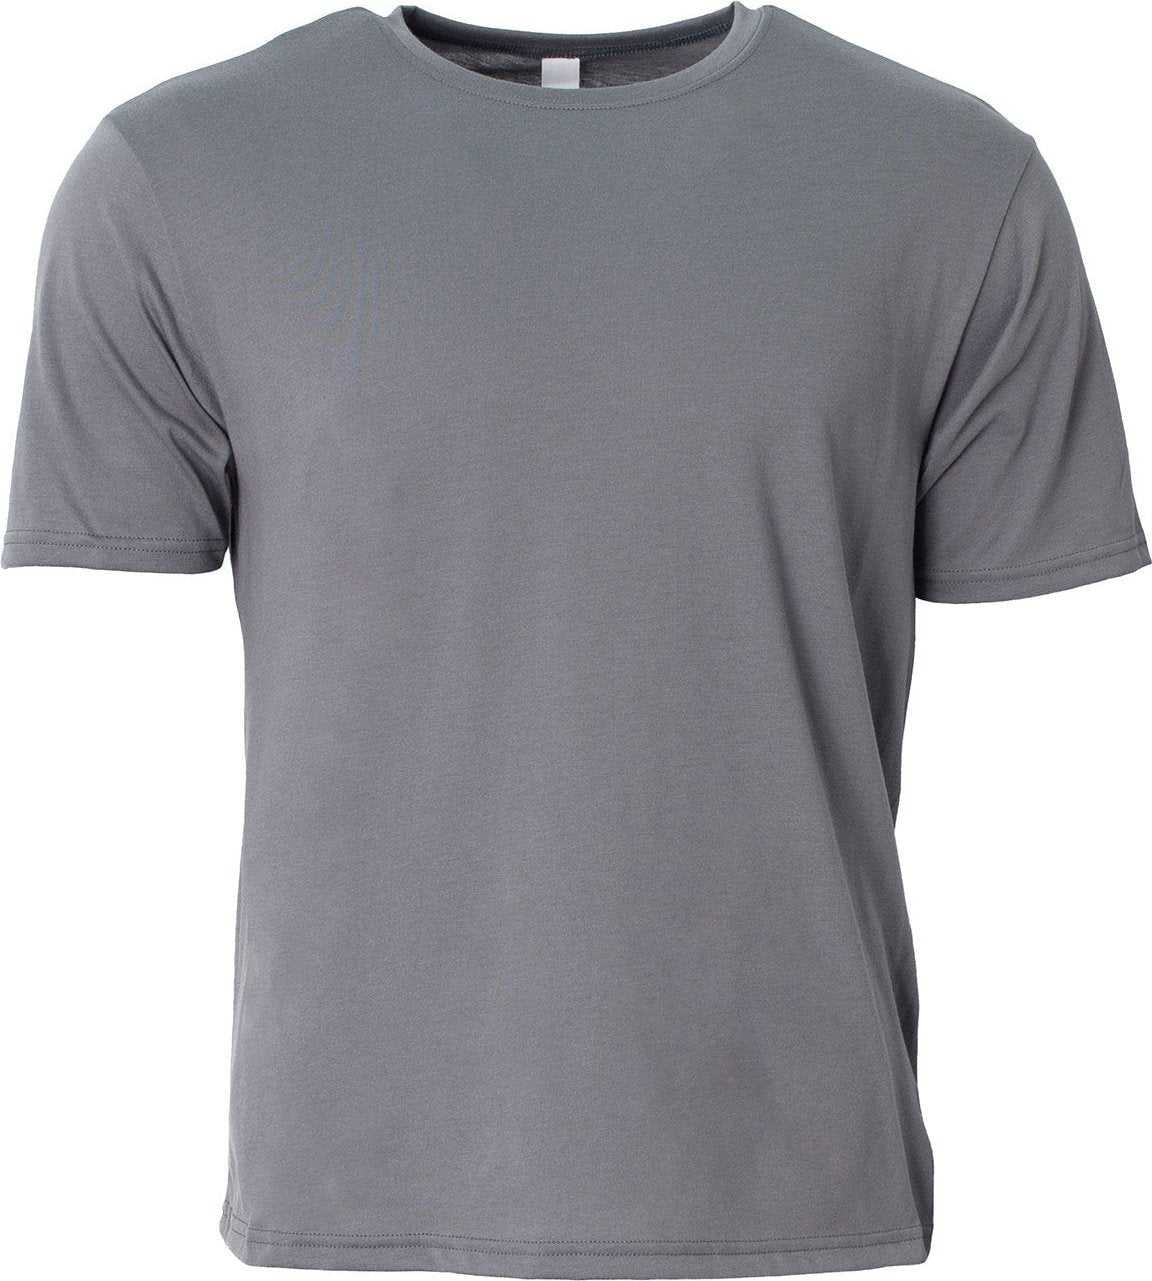 A4 NB3013 Youth Softek T-Shirt - Graphite